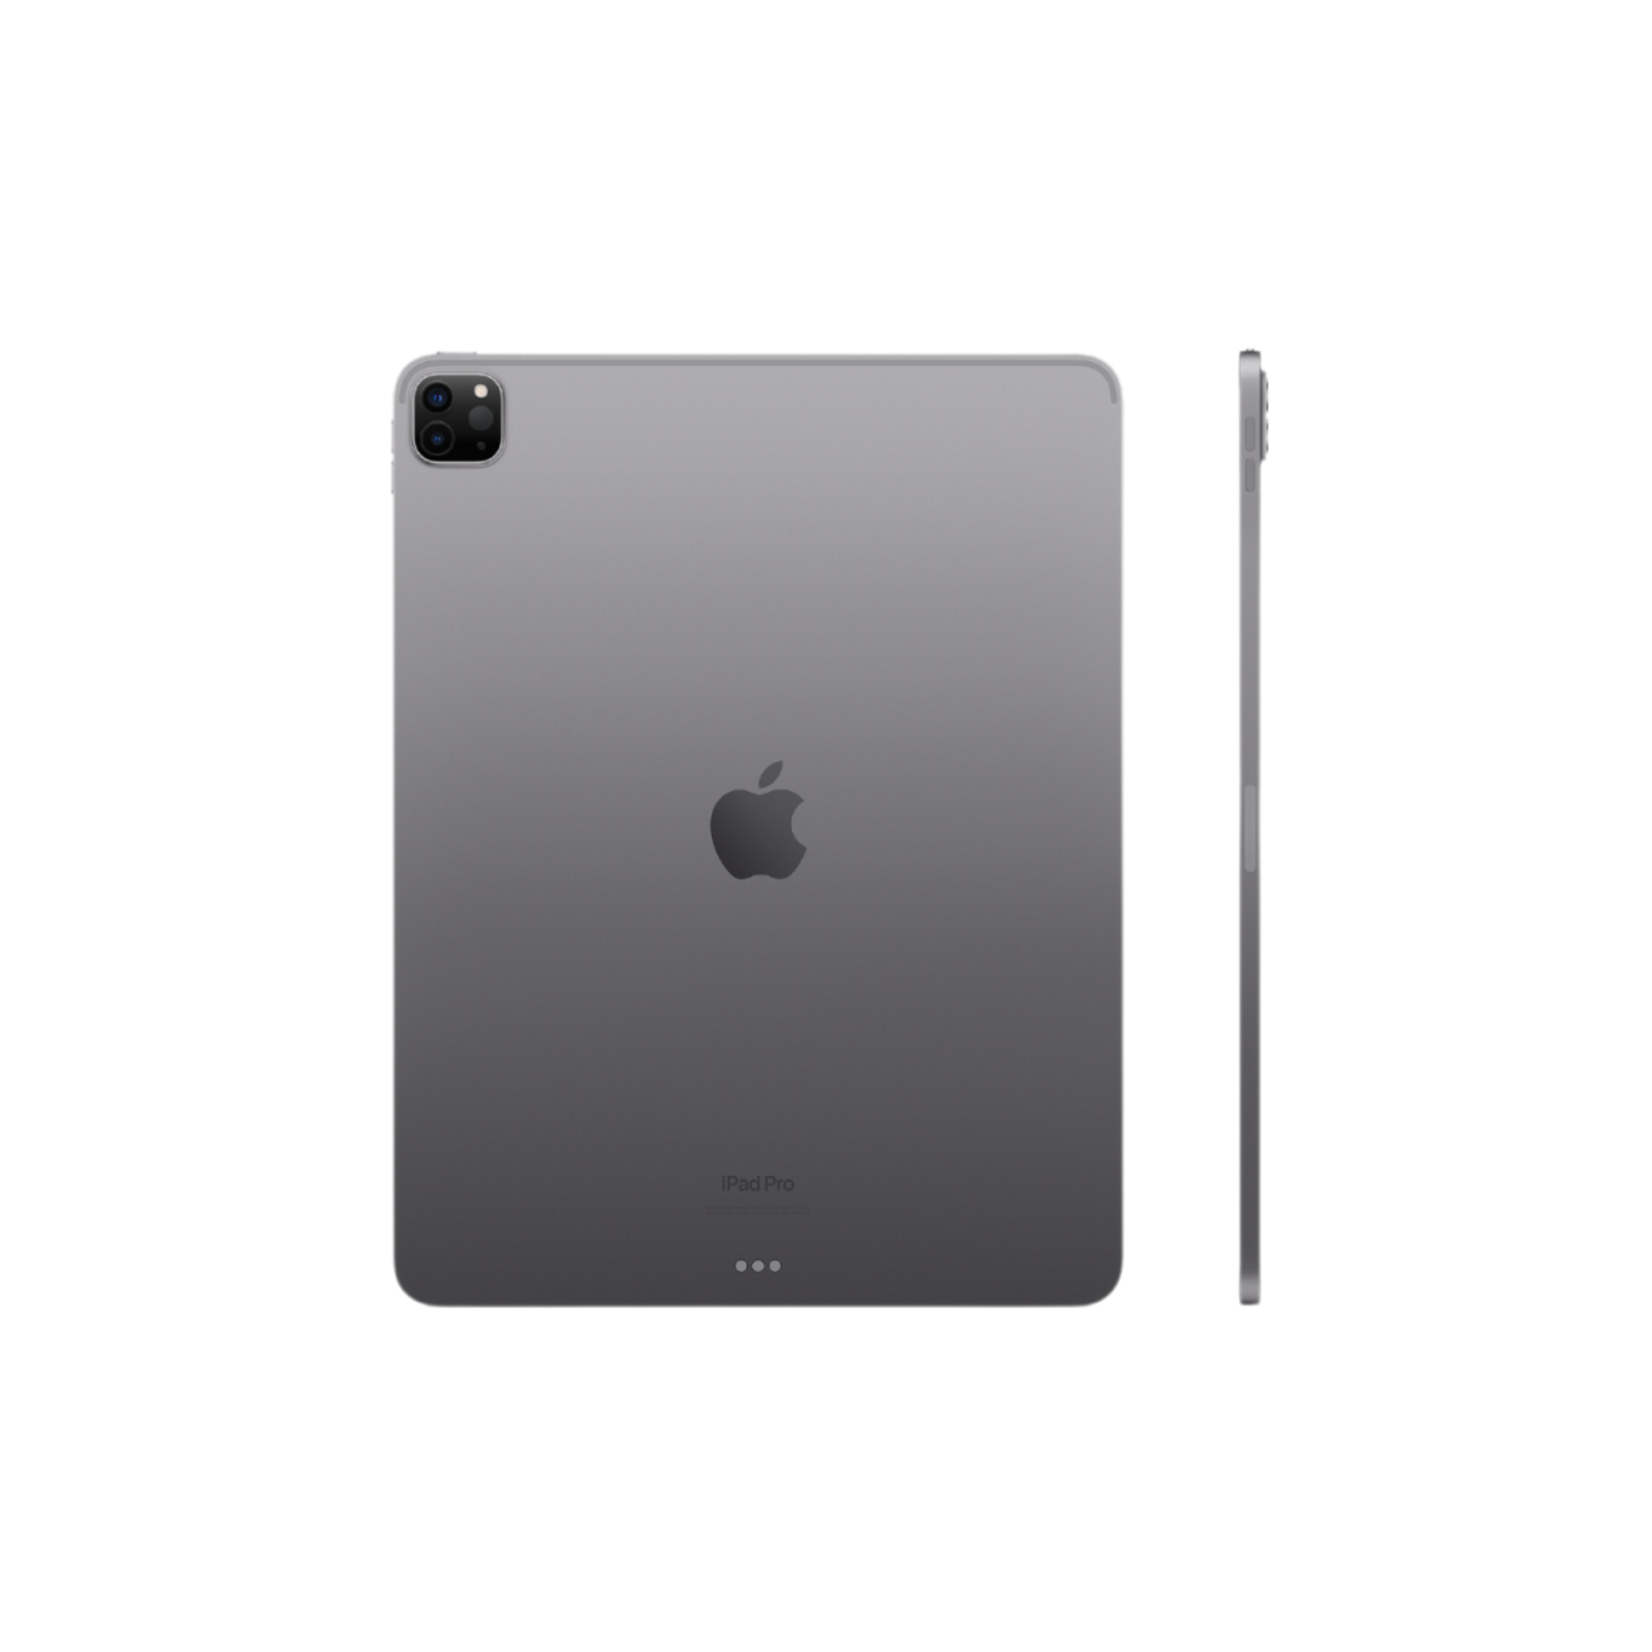 Apple 12.9-inch iPad Pro - Space Gray - 256GB